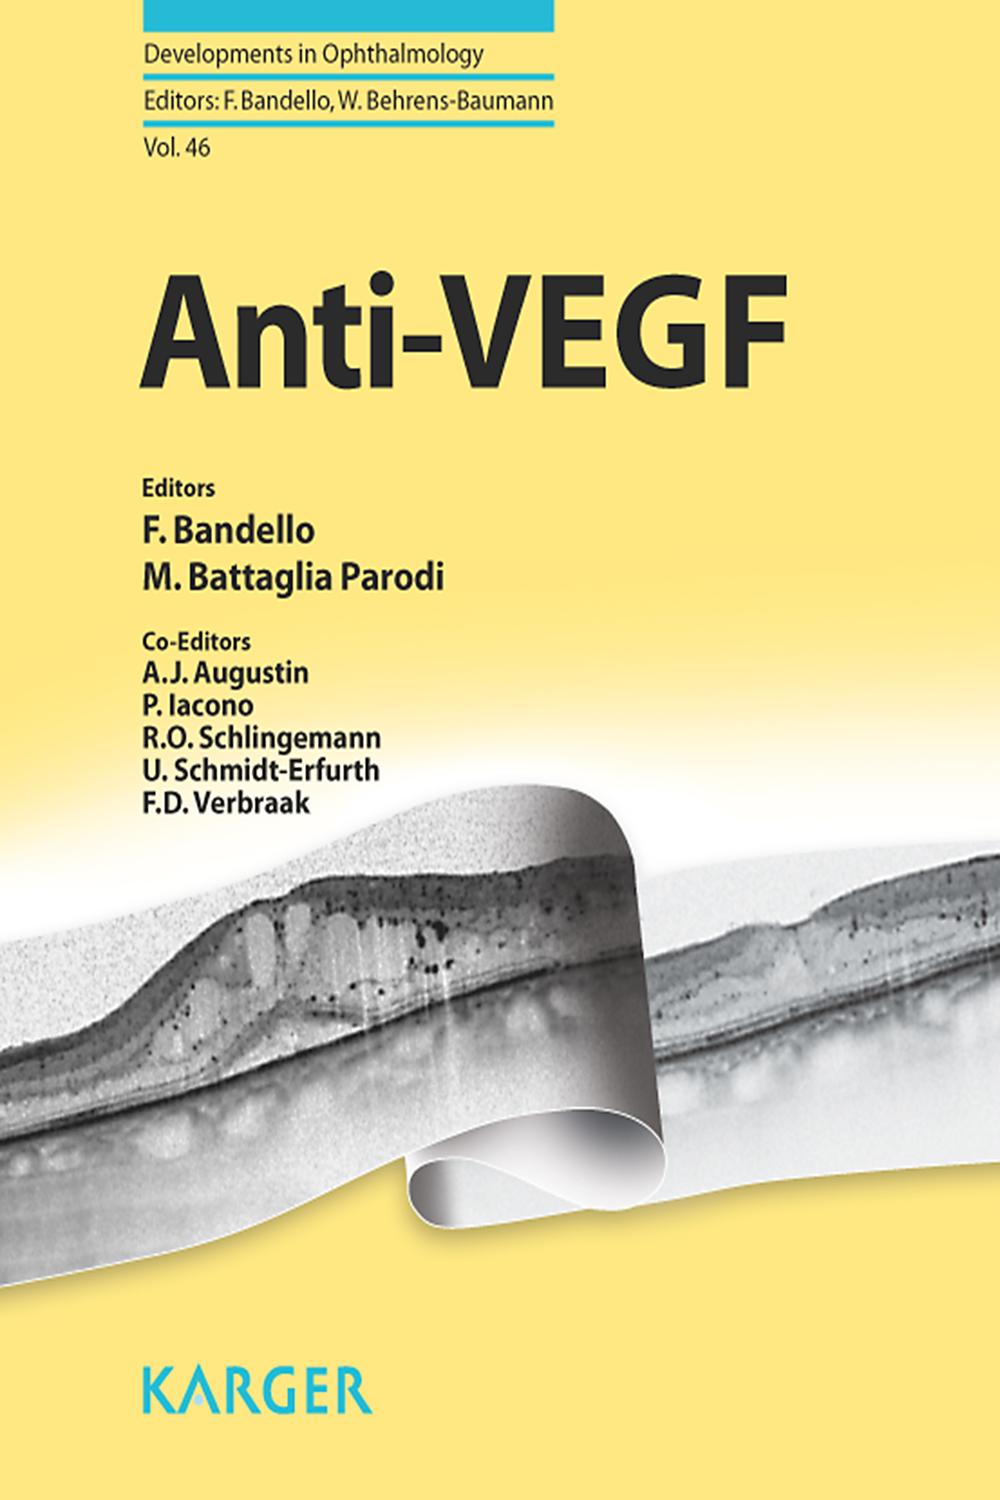 Anti-VEGF - M. Battaglia Parodi, A. J. Augustin, P. Iacono, R. O. Schlingemann, U. Schmidt-Erfurth, F. D. Verbraak, F. Bandello